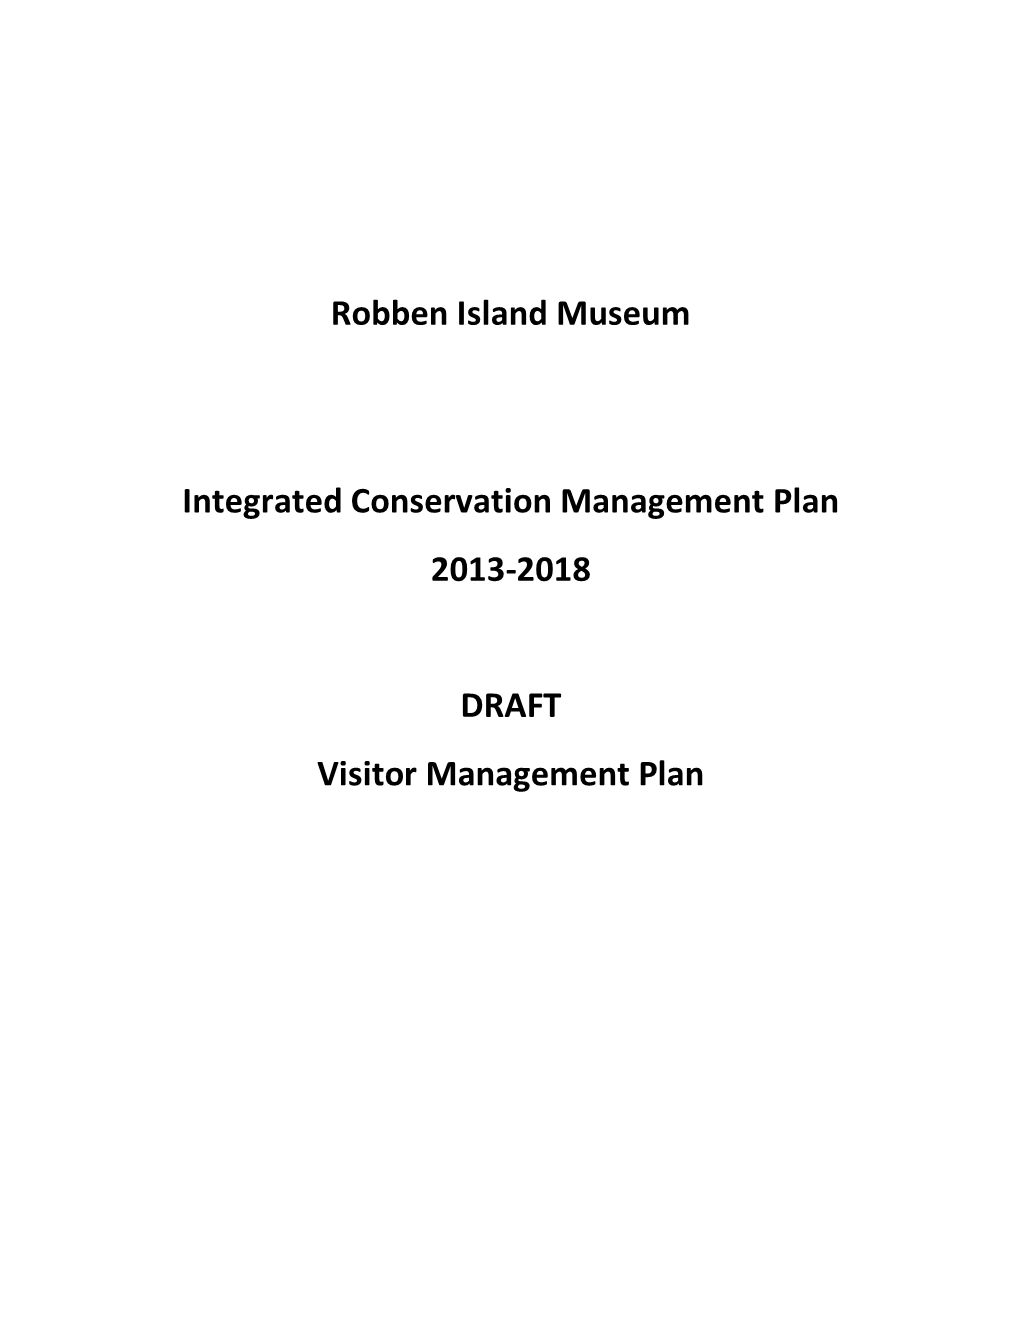 Robben Island Museum Integrated Conservation Management Plan